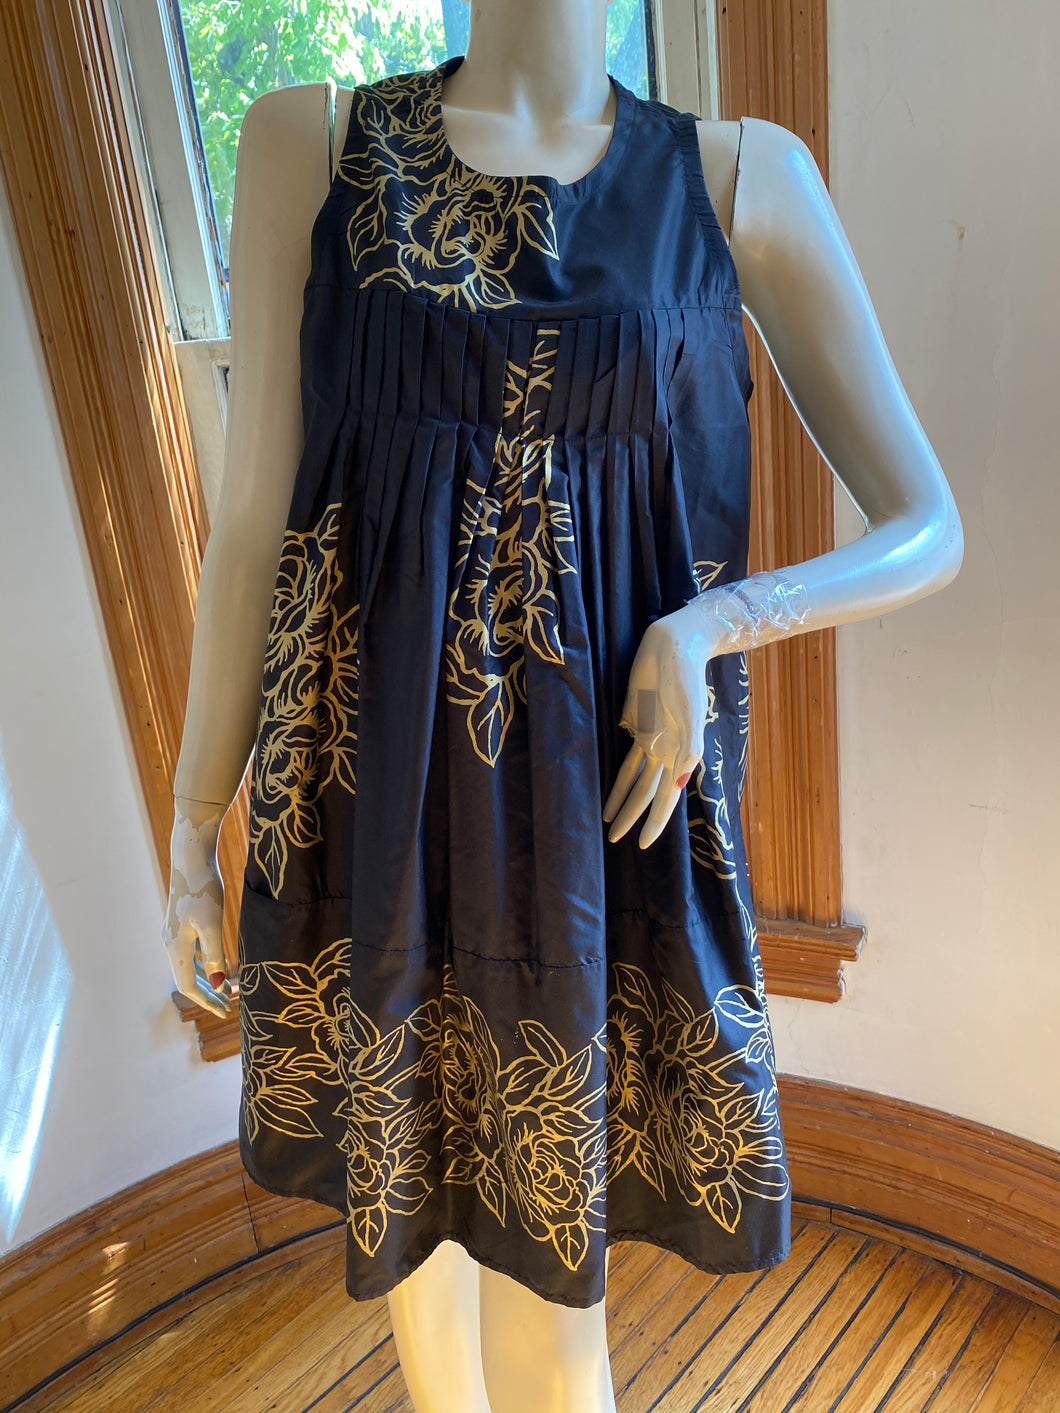 Heyne Bogut Black/Gold Screen Print Sleeveless Dress, size S/M (Brand size 2)